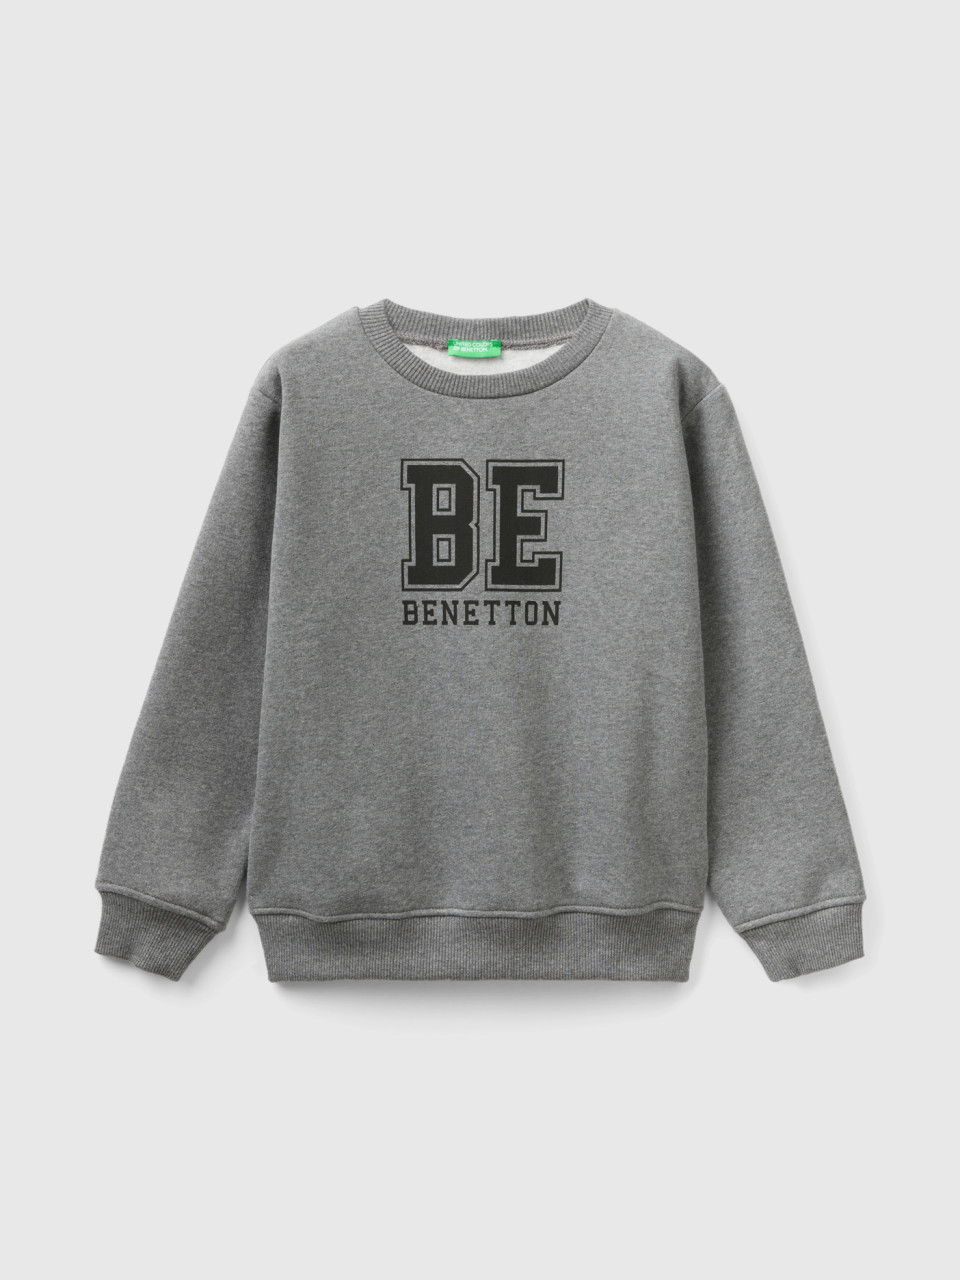 Benetton, Warm Sweatshirt With Logo, Dark Gray, Kids